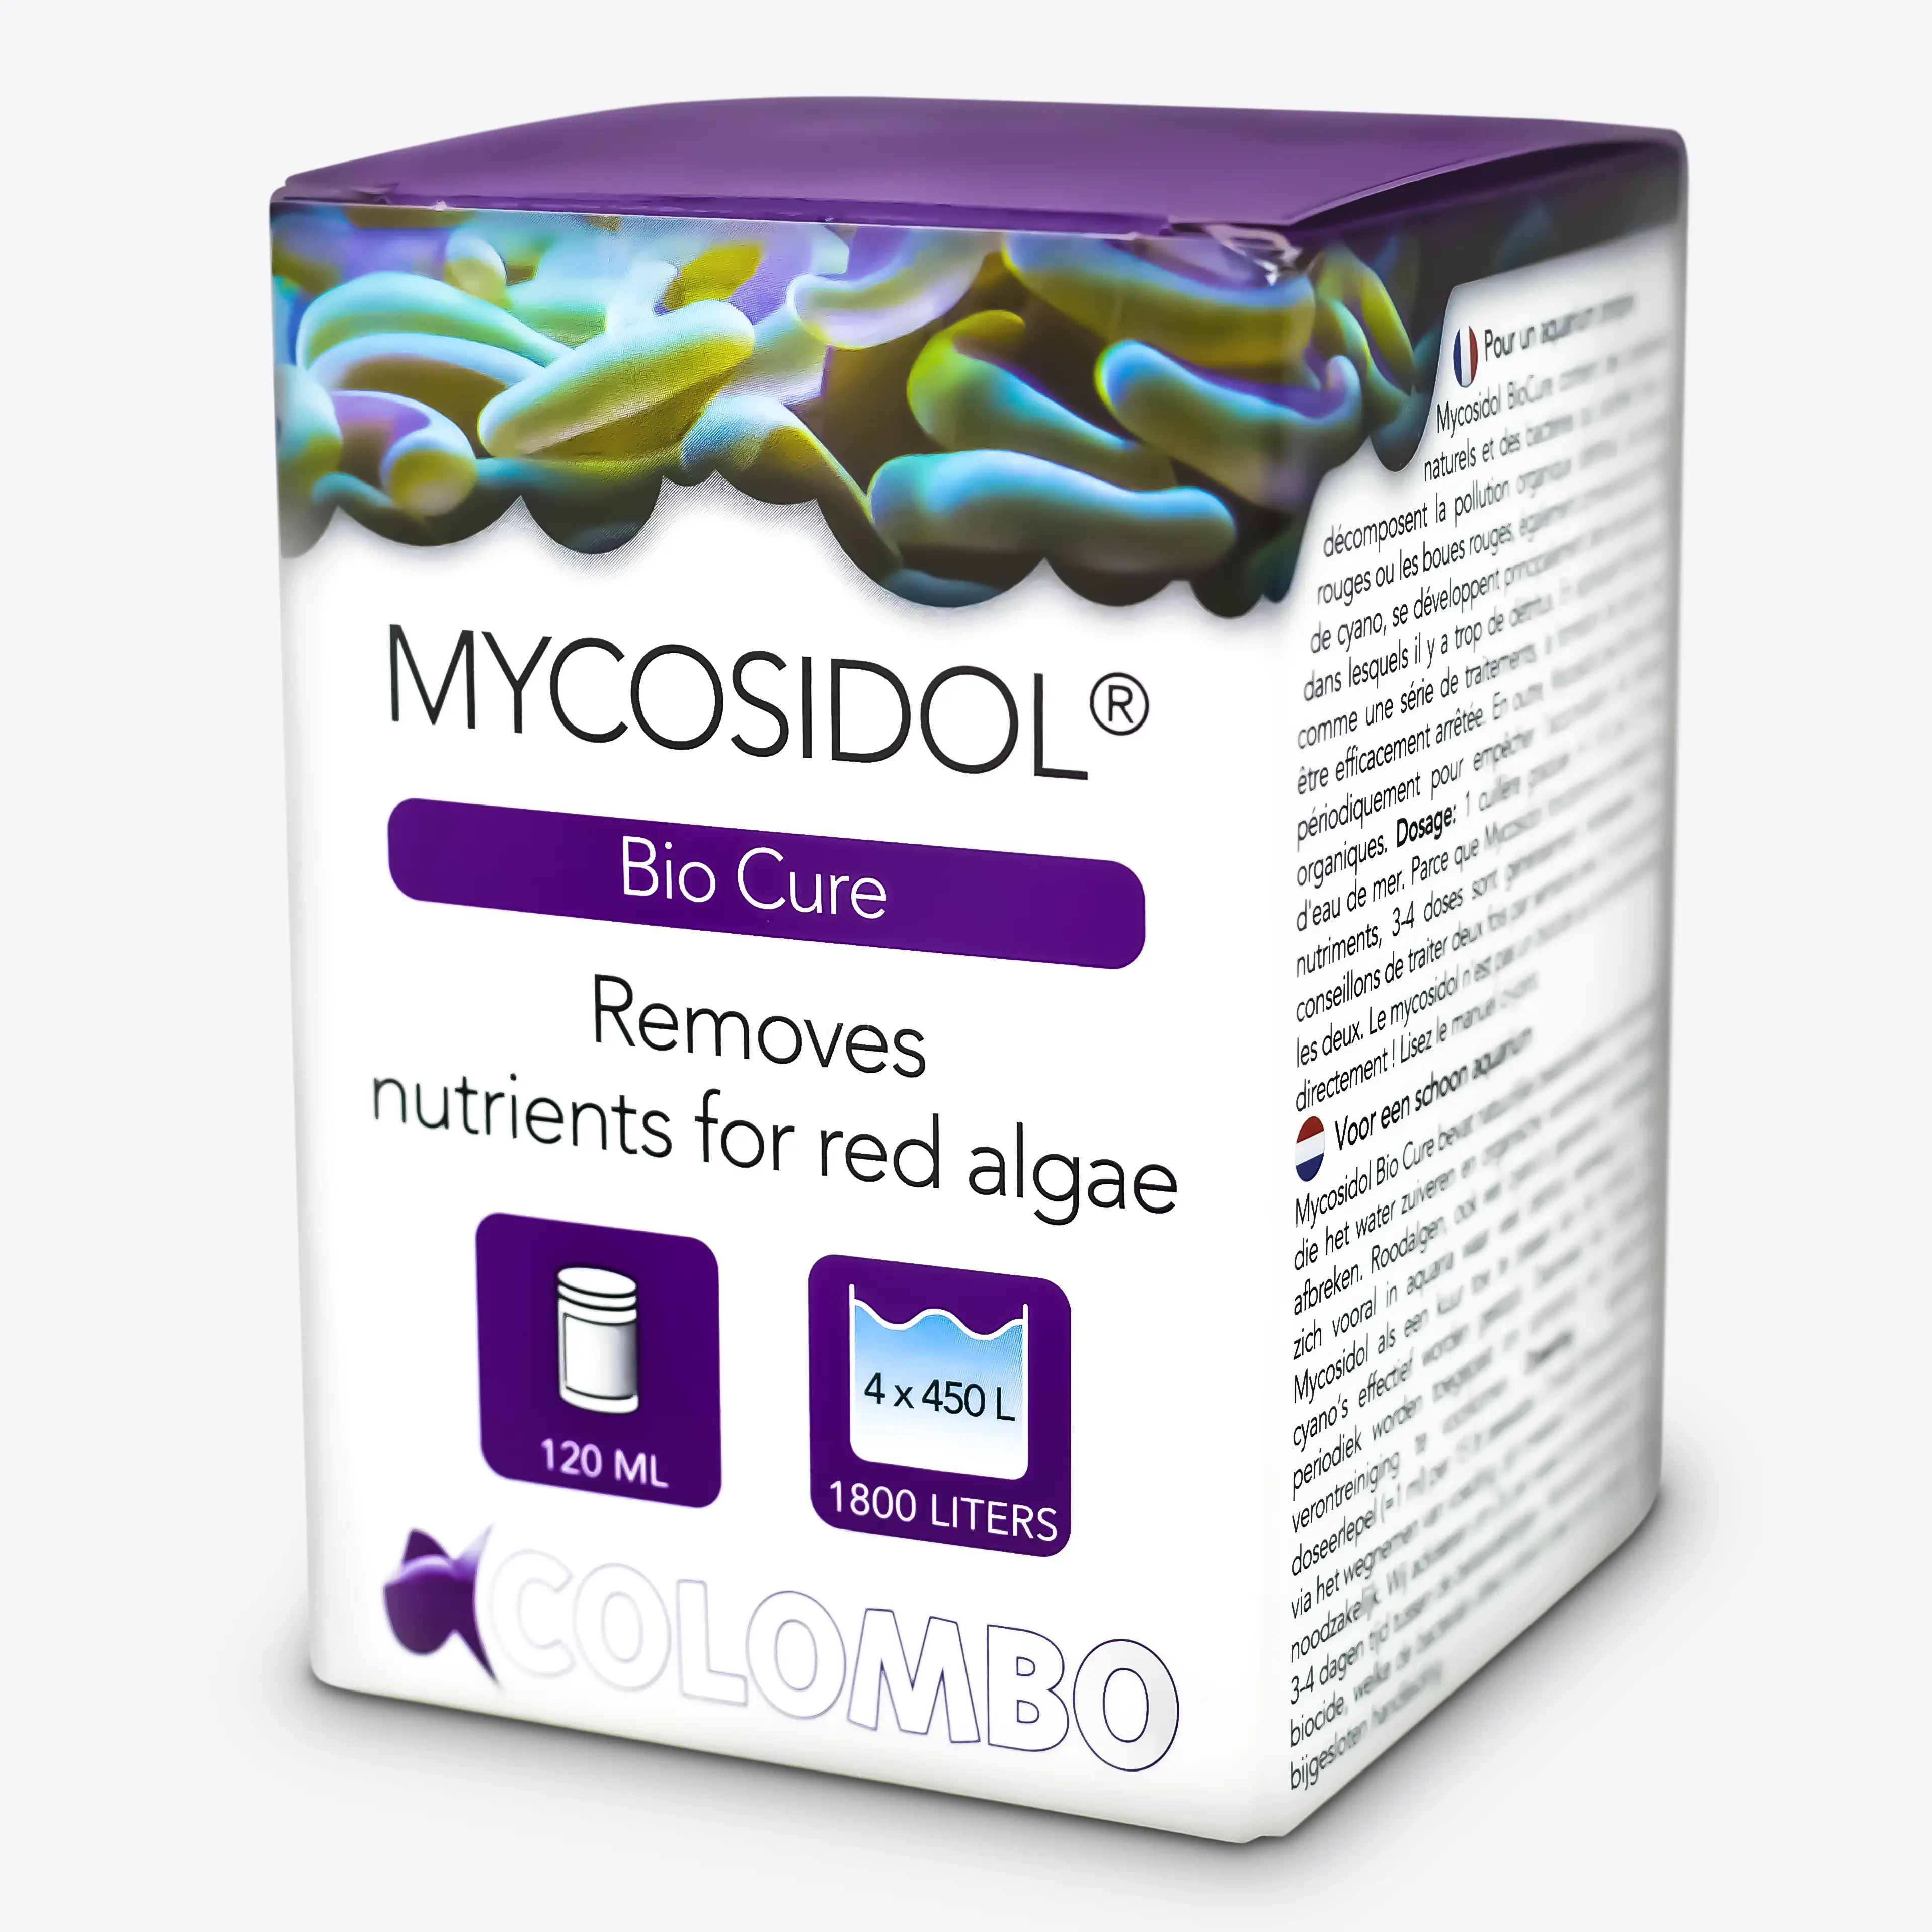 N5060600 Colombo Mycosidol Bio Cure 120 ml 6G3A5226